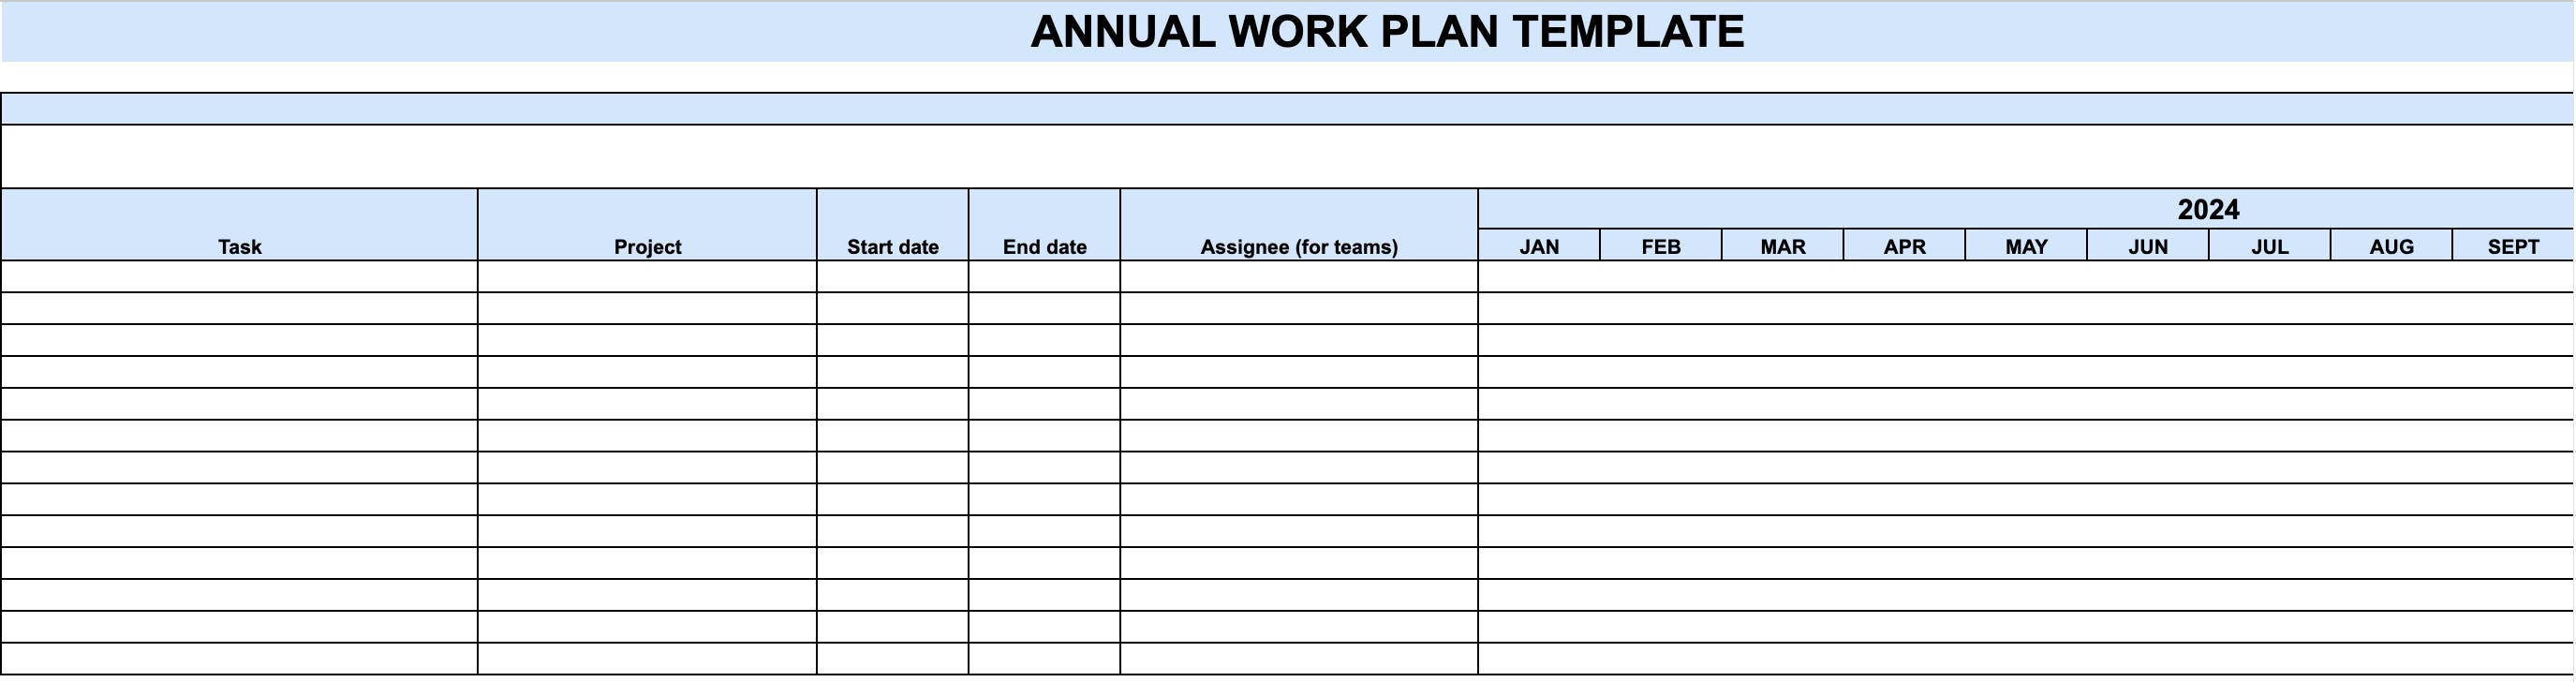 Screenshot of annual work plan template